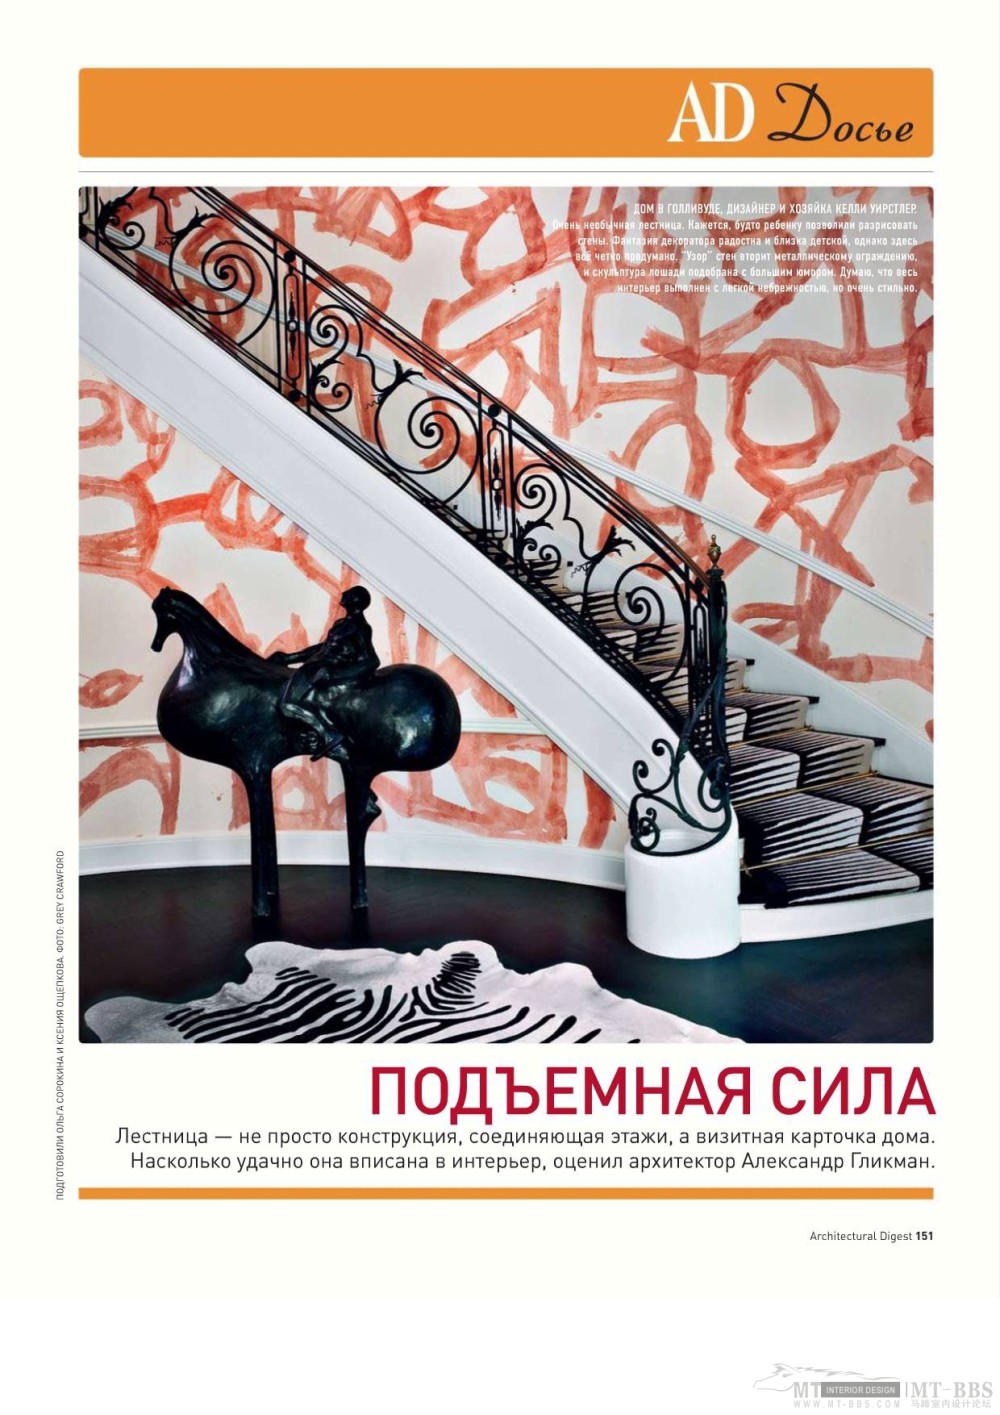 《AD Russia》2010-10(国外陈设设计杂志)_AD Russia 2010-10MT-BBS-153.jpg